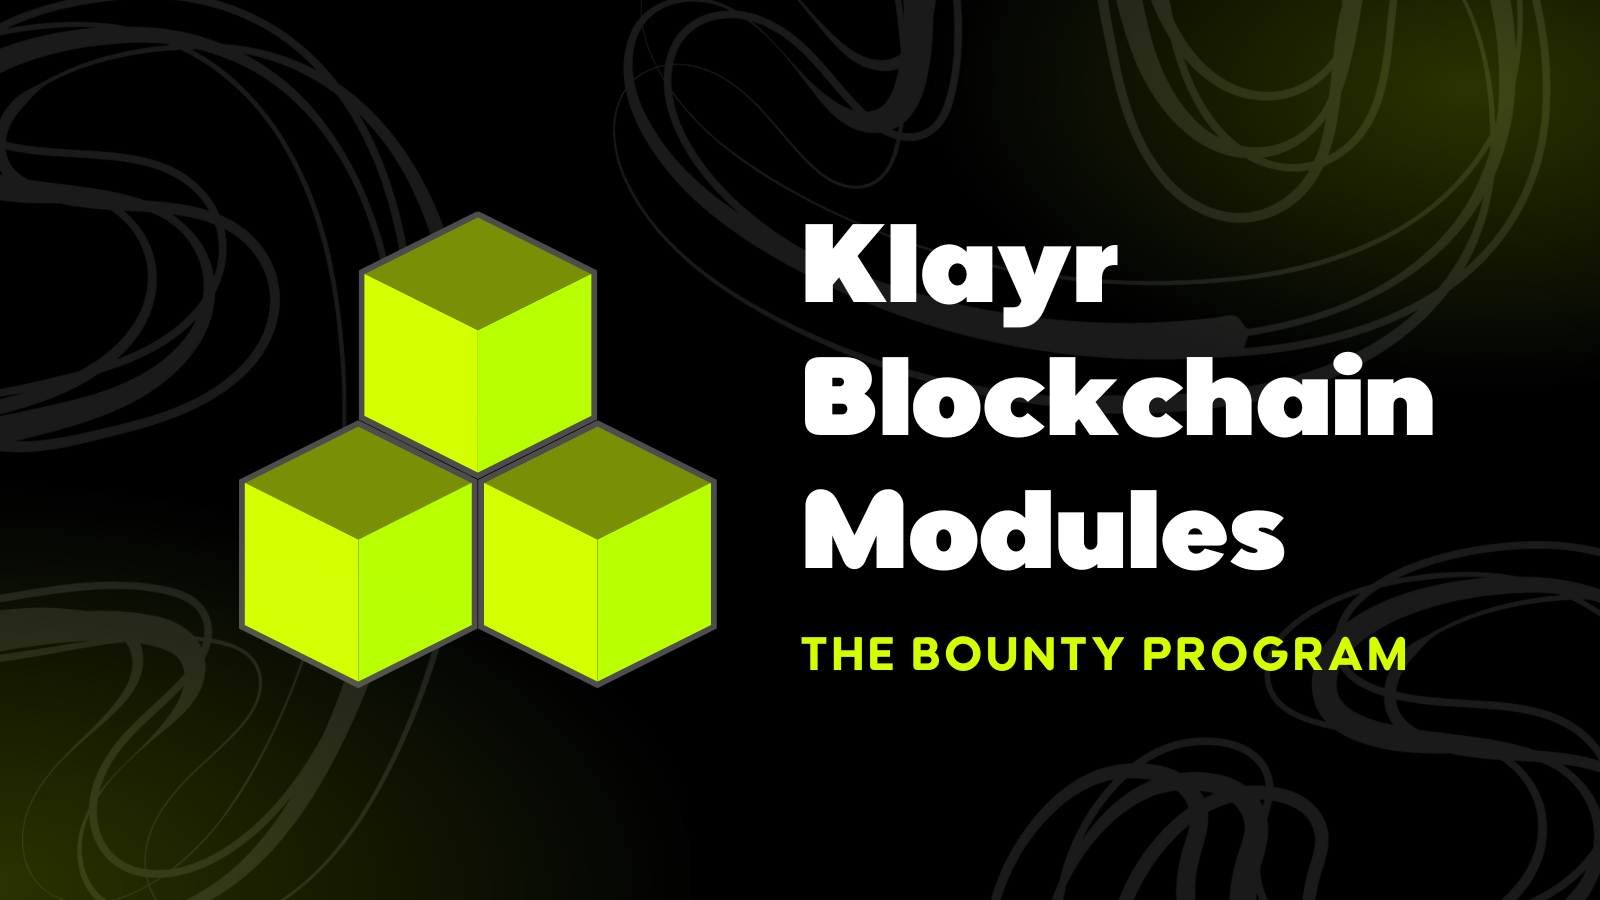 Klayr's Modular Approach